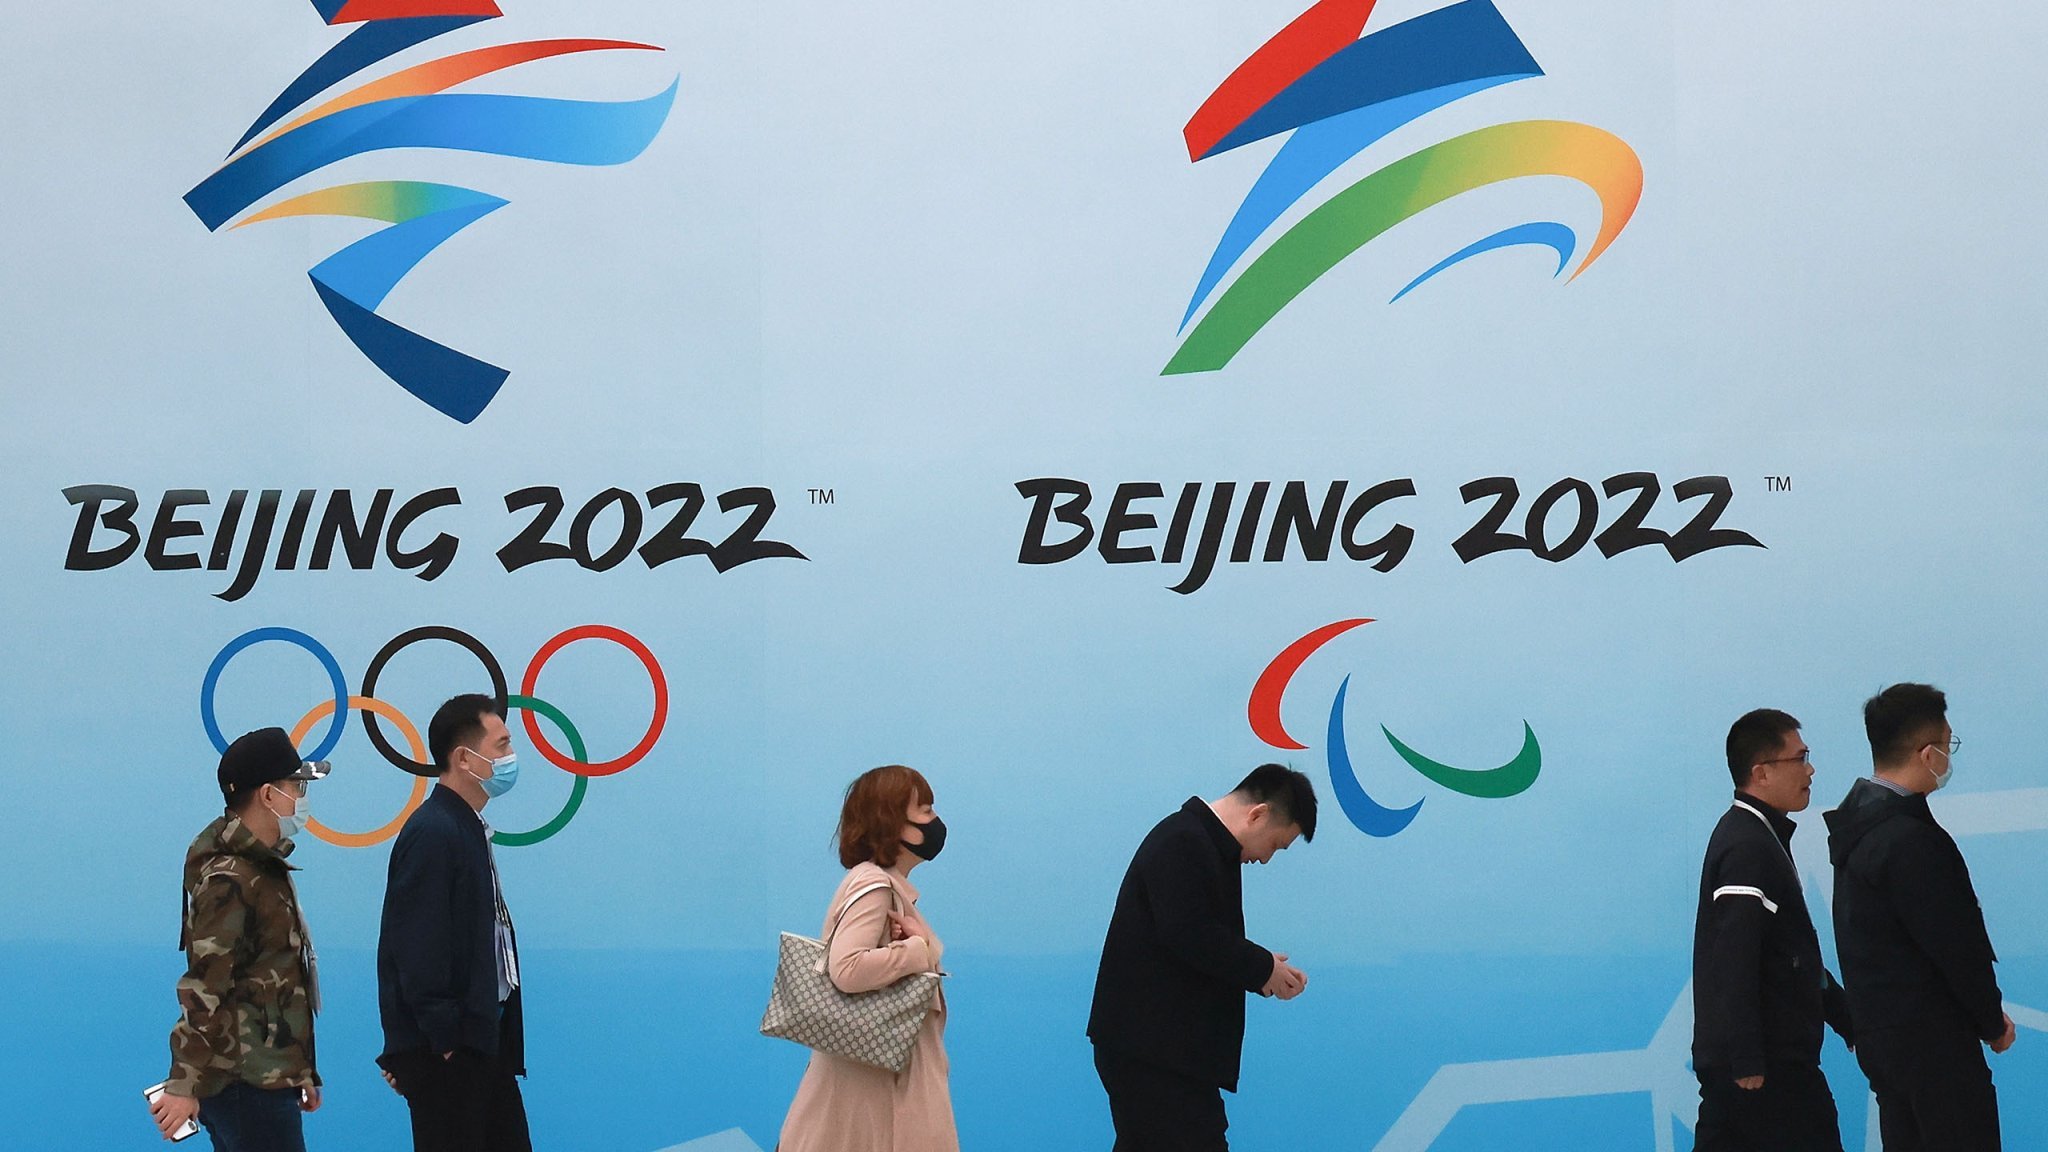 Ahead of the 2022 Winter Olympics in Beijing